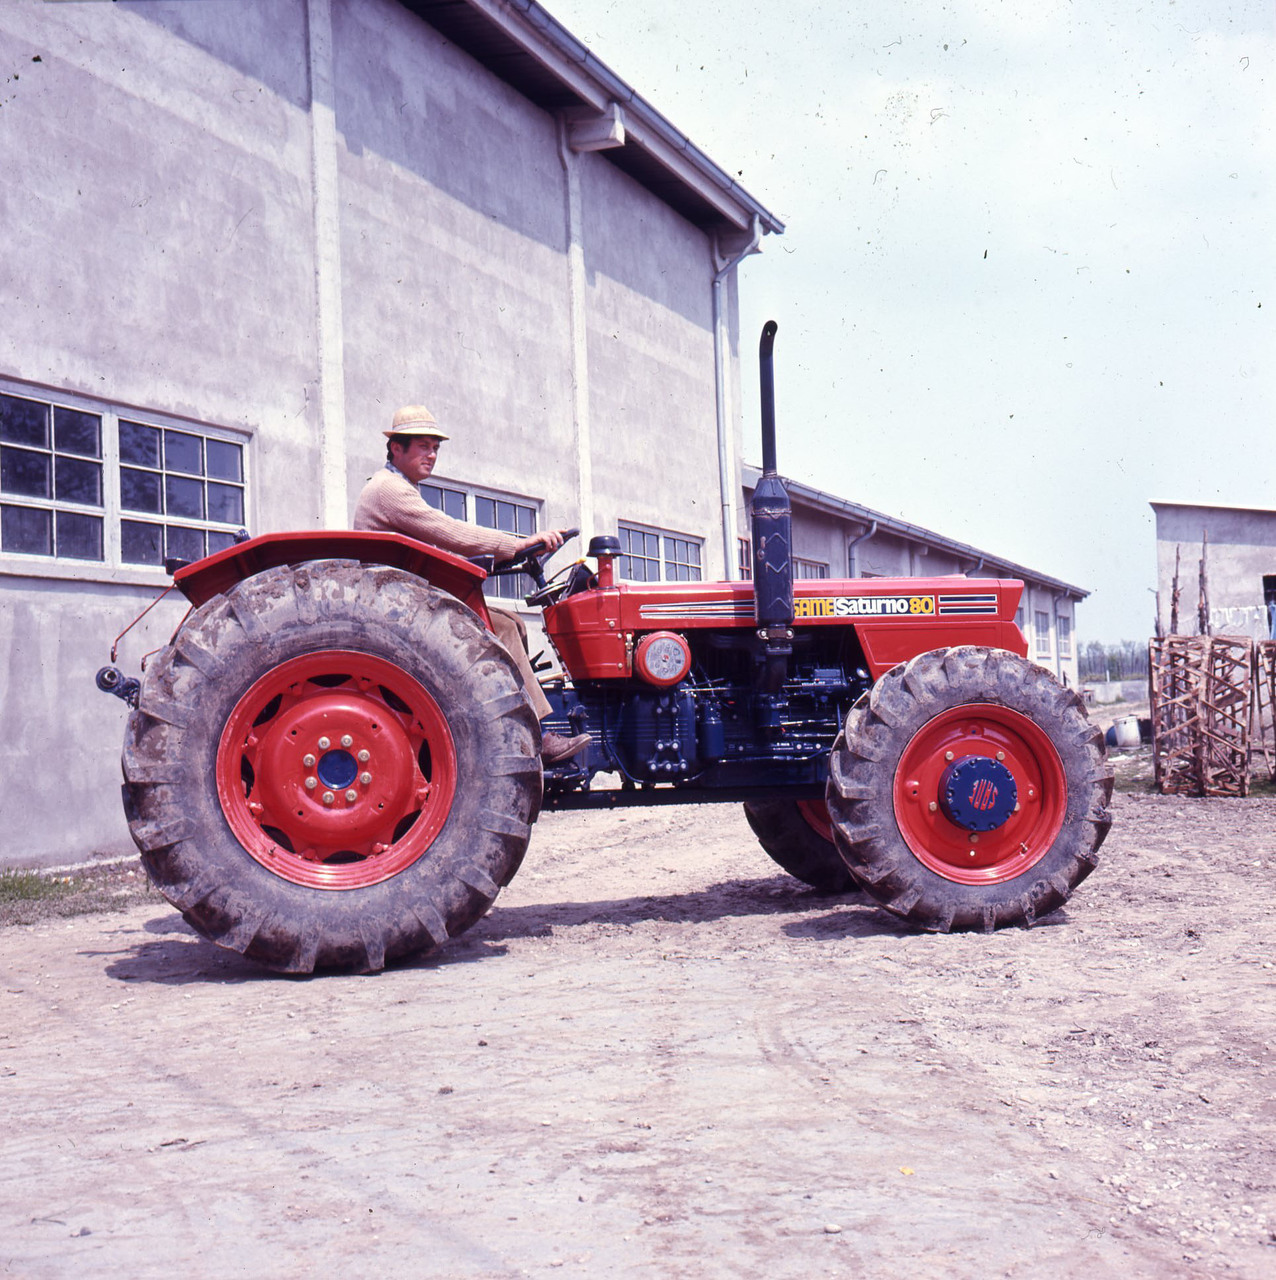 SAME Saturno 80 Traktor (Quelle: SDF Archiv)